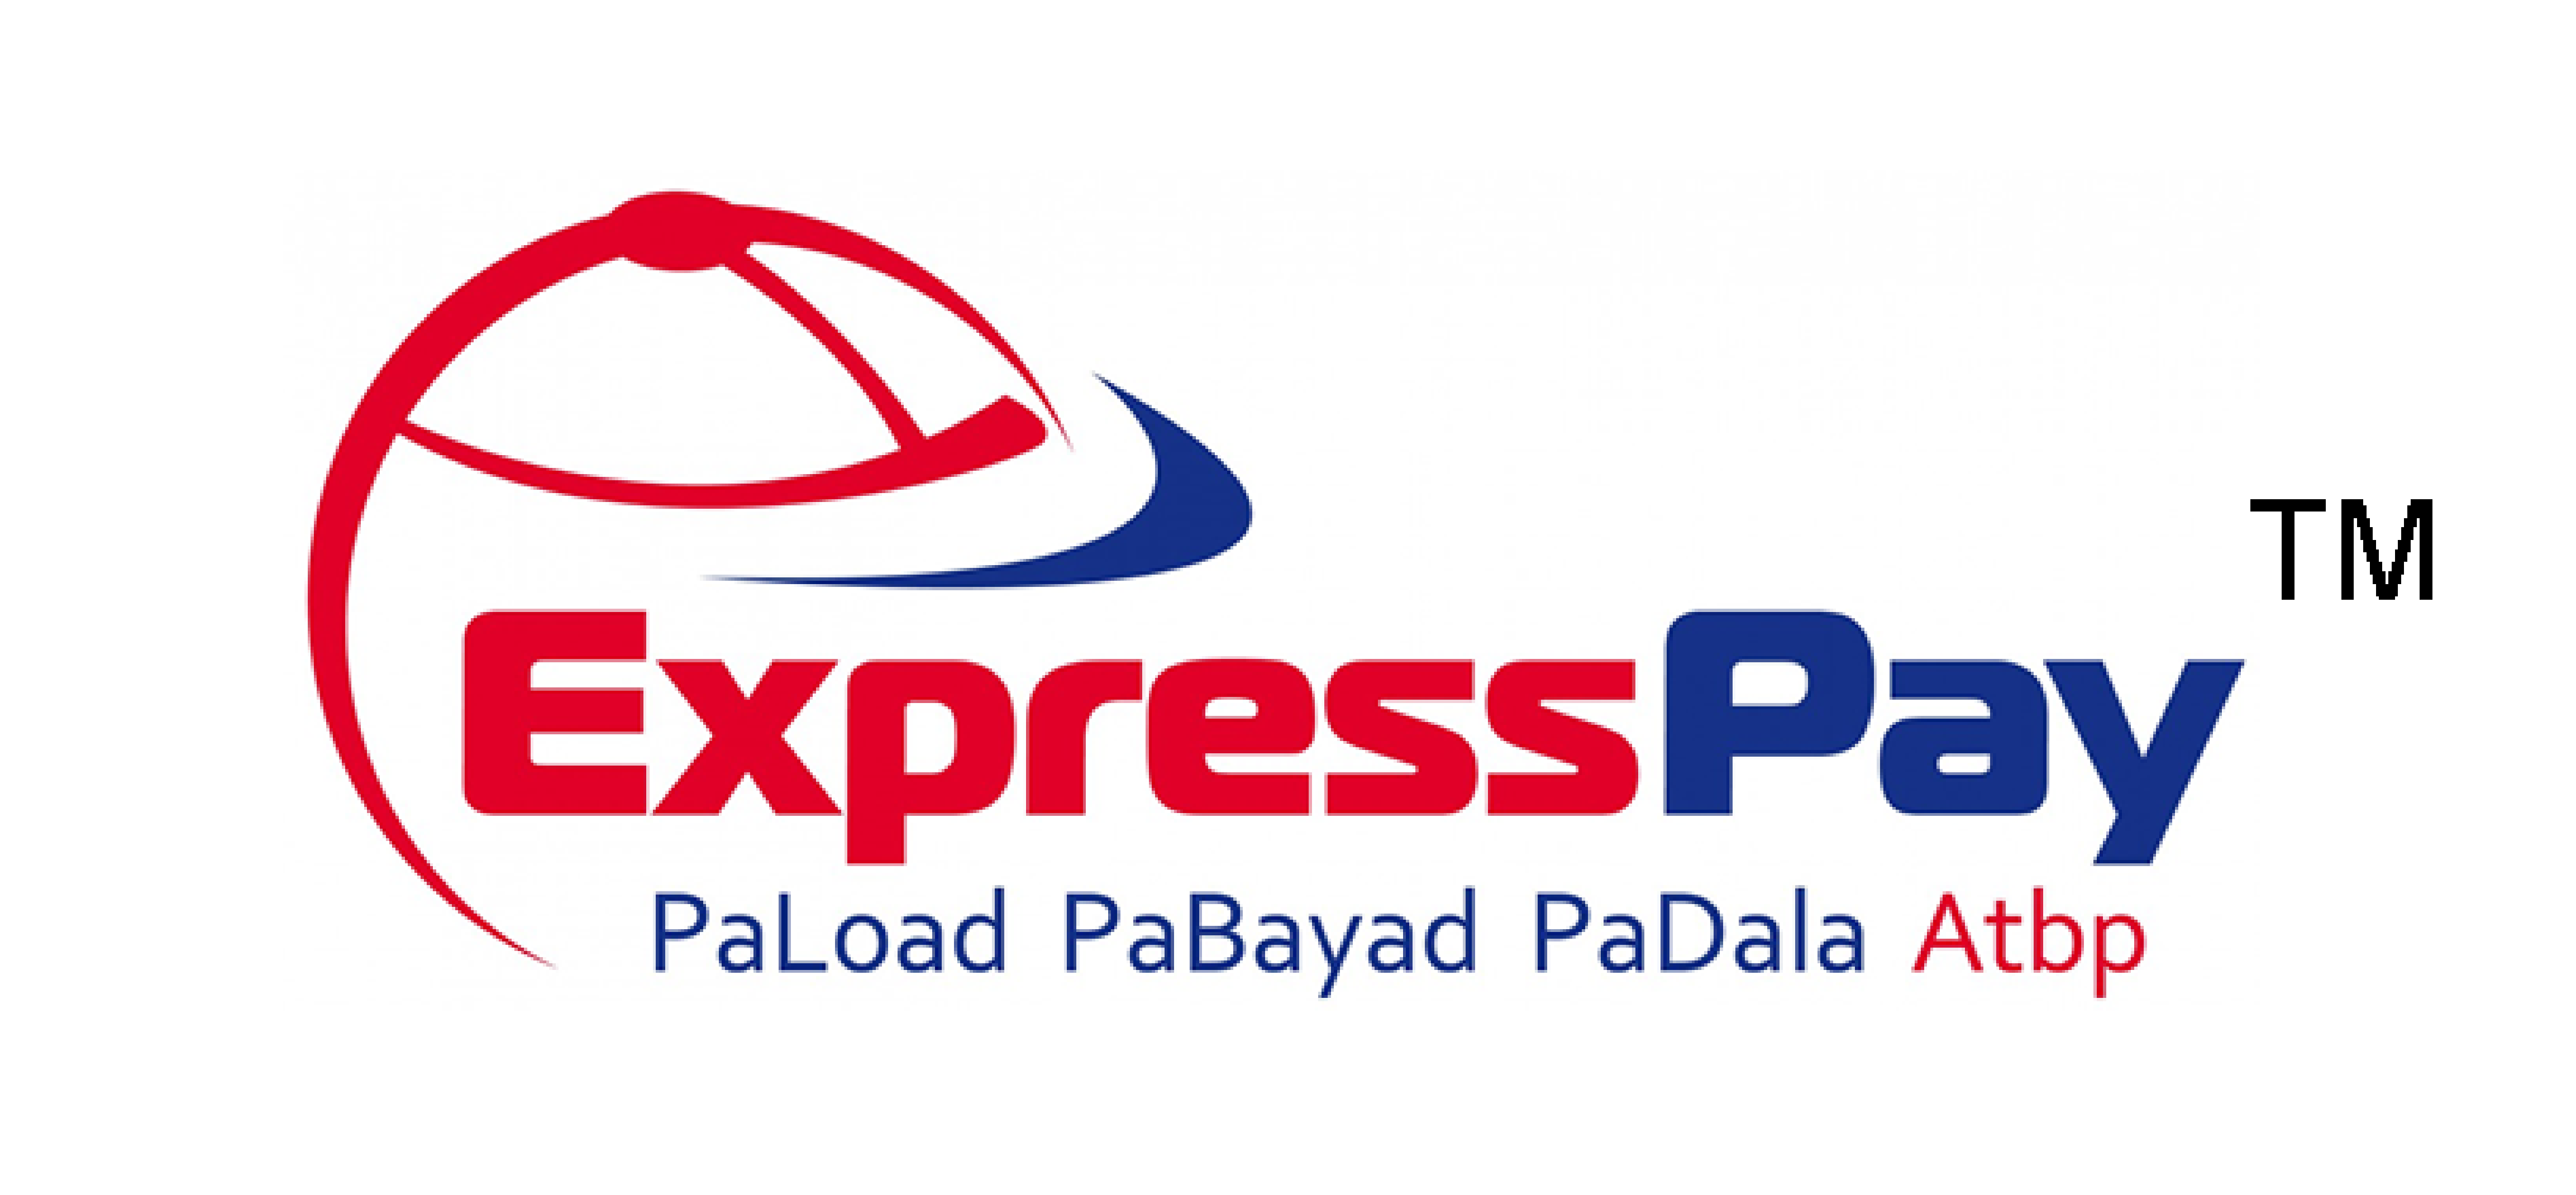 Expresspay Network Philippines